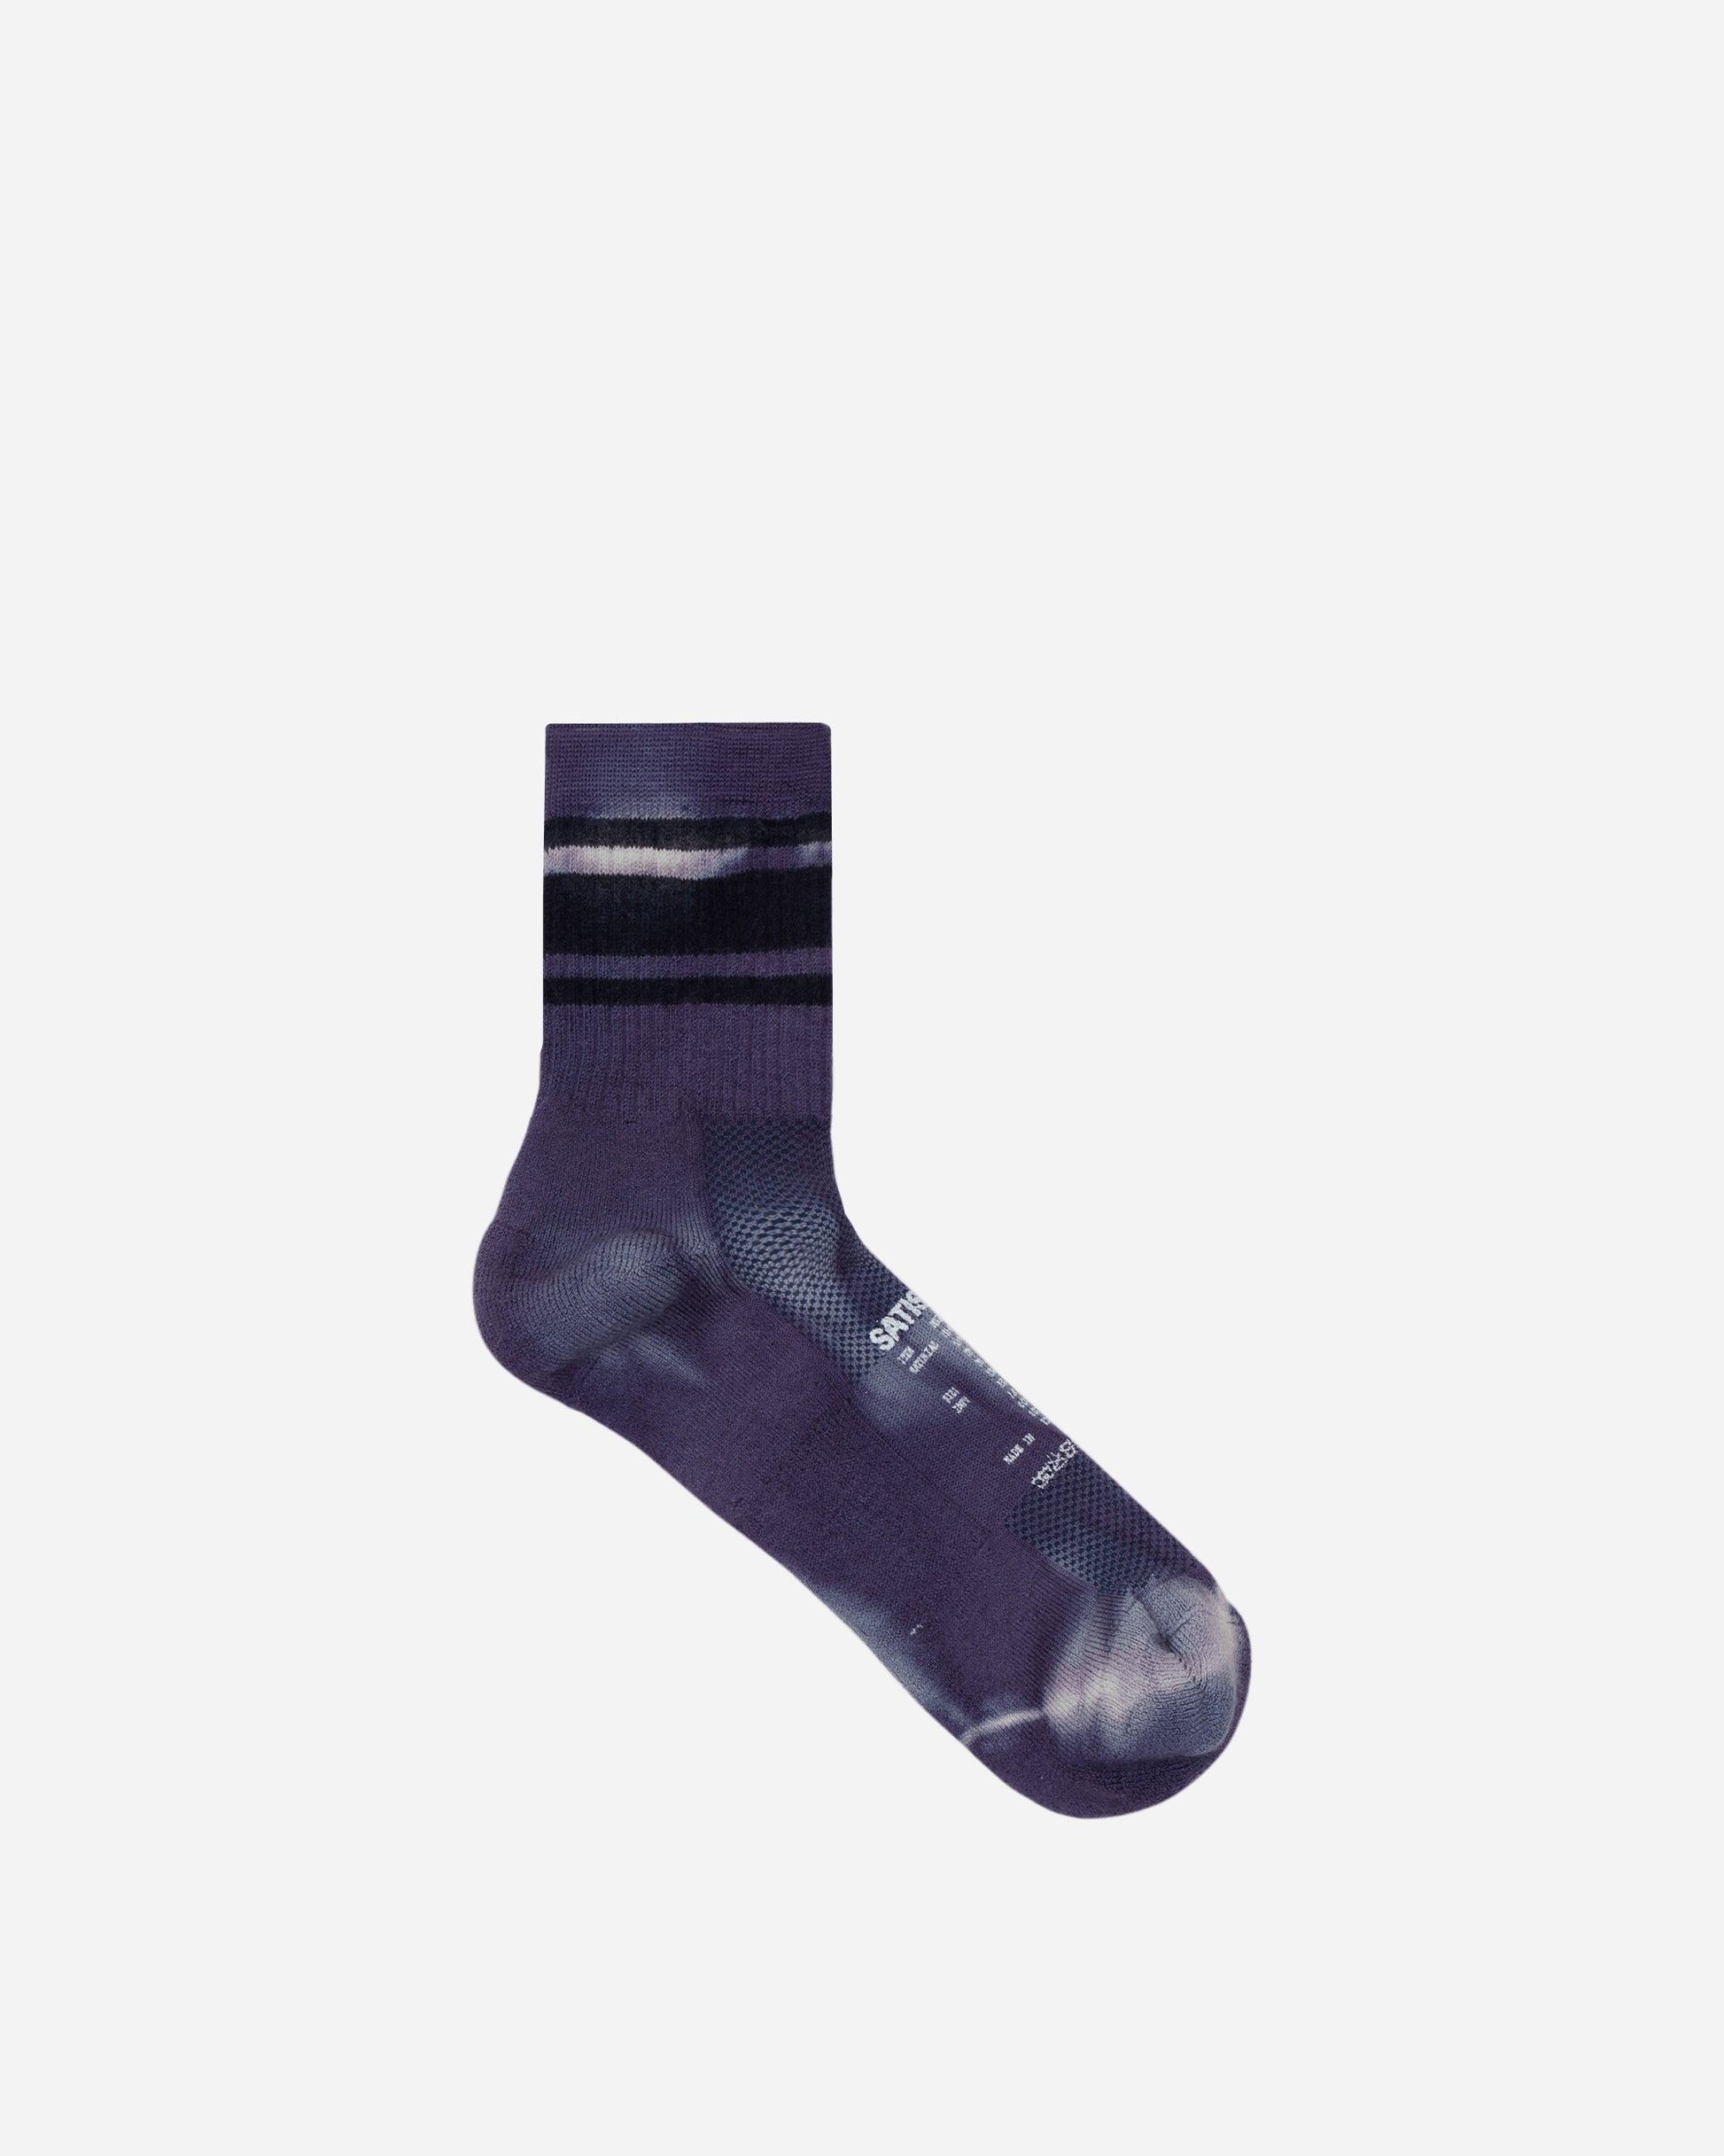 Satisfy Merino Tube Socks Deep Lilac Underwear Socks 5110 DL